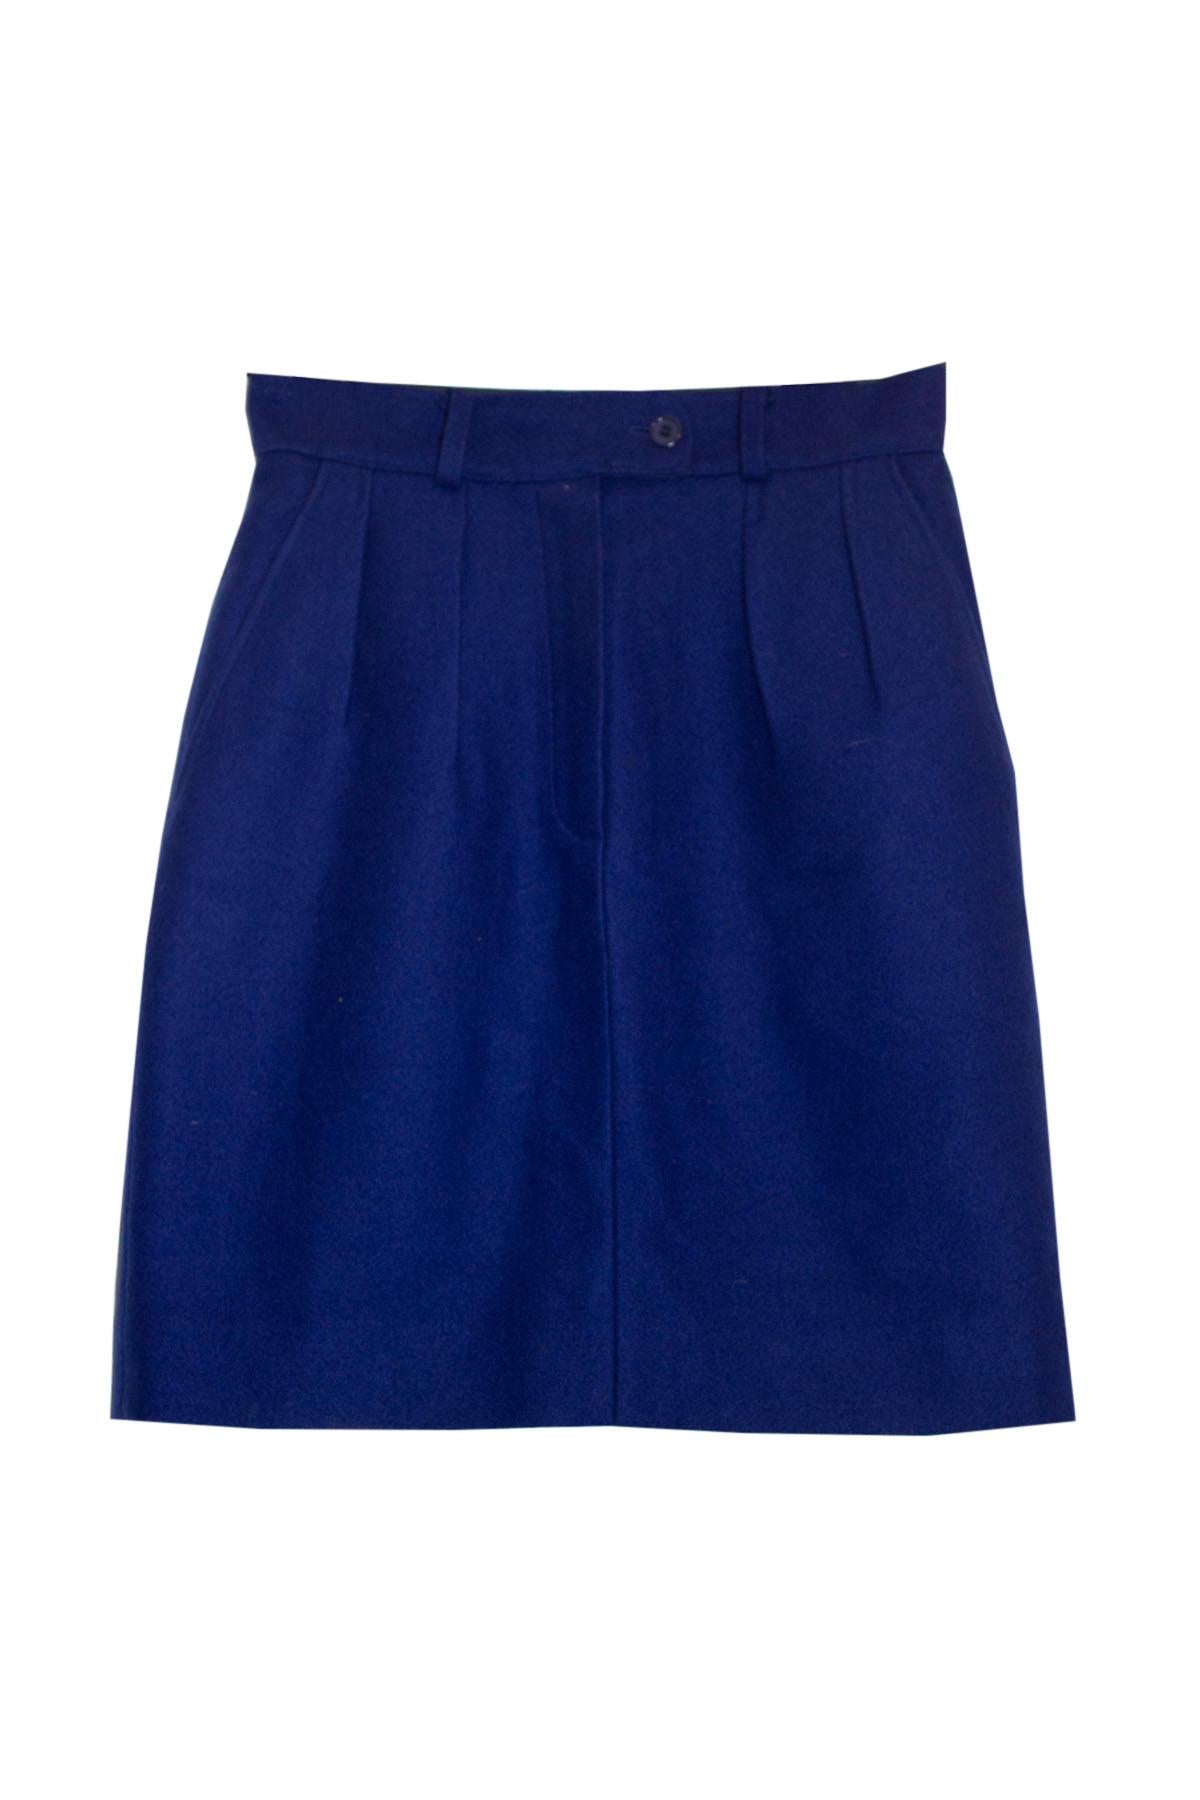 Vintage Kenzo Blue Wool Mini Skirt For Sale 1